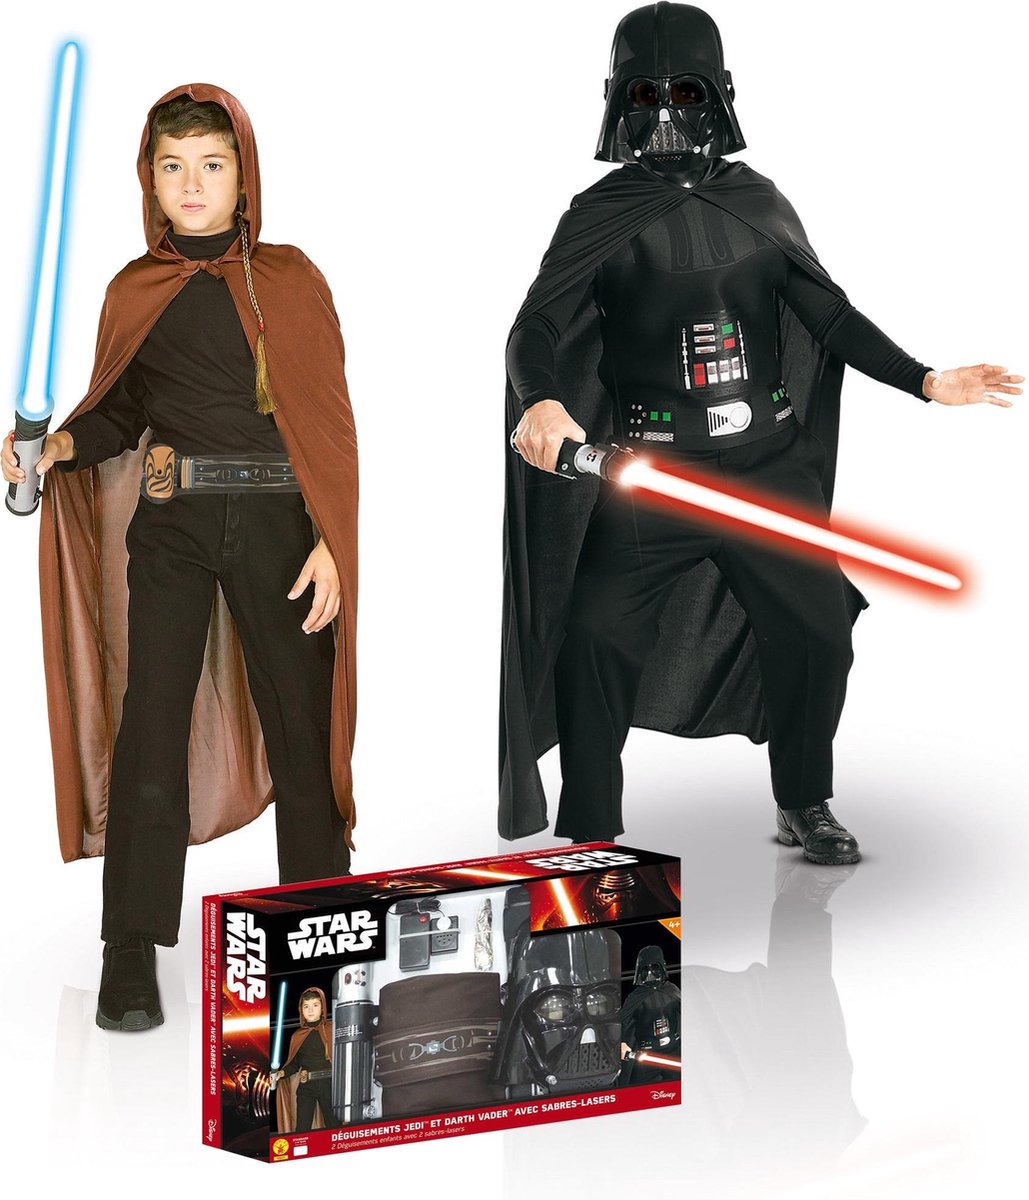 Pack Jedi Darth Vader kostuum voor kinderen - Star Wars� - Verkleedkleding - 128-140 | bol.com